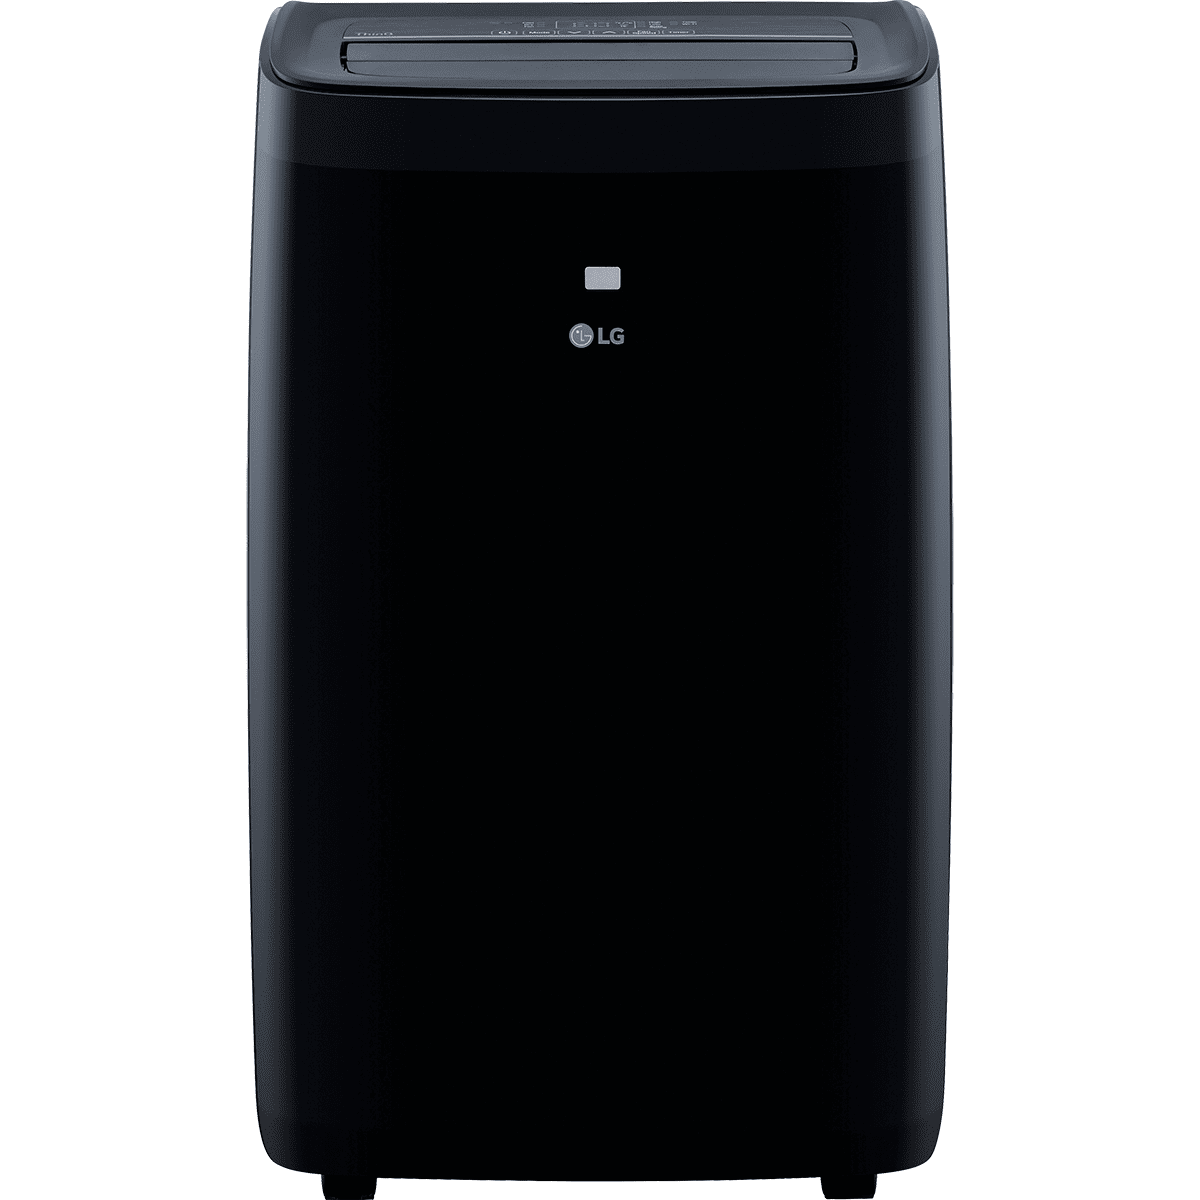 LG 10,000 BTU Wi-Fi Portable Air Conditioner